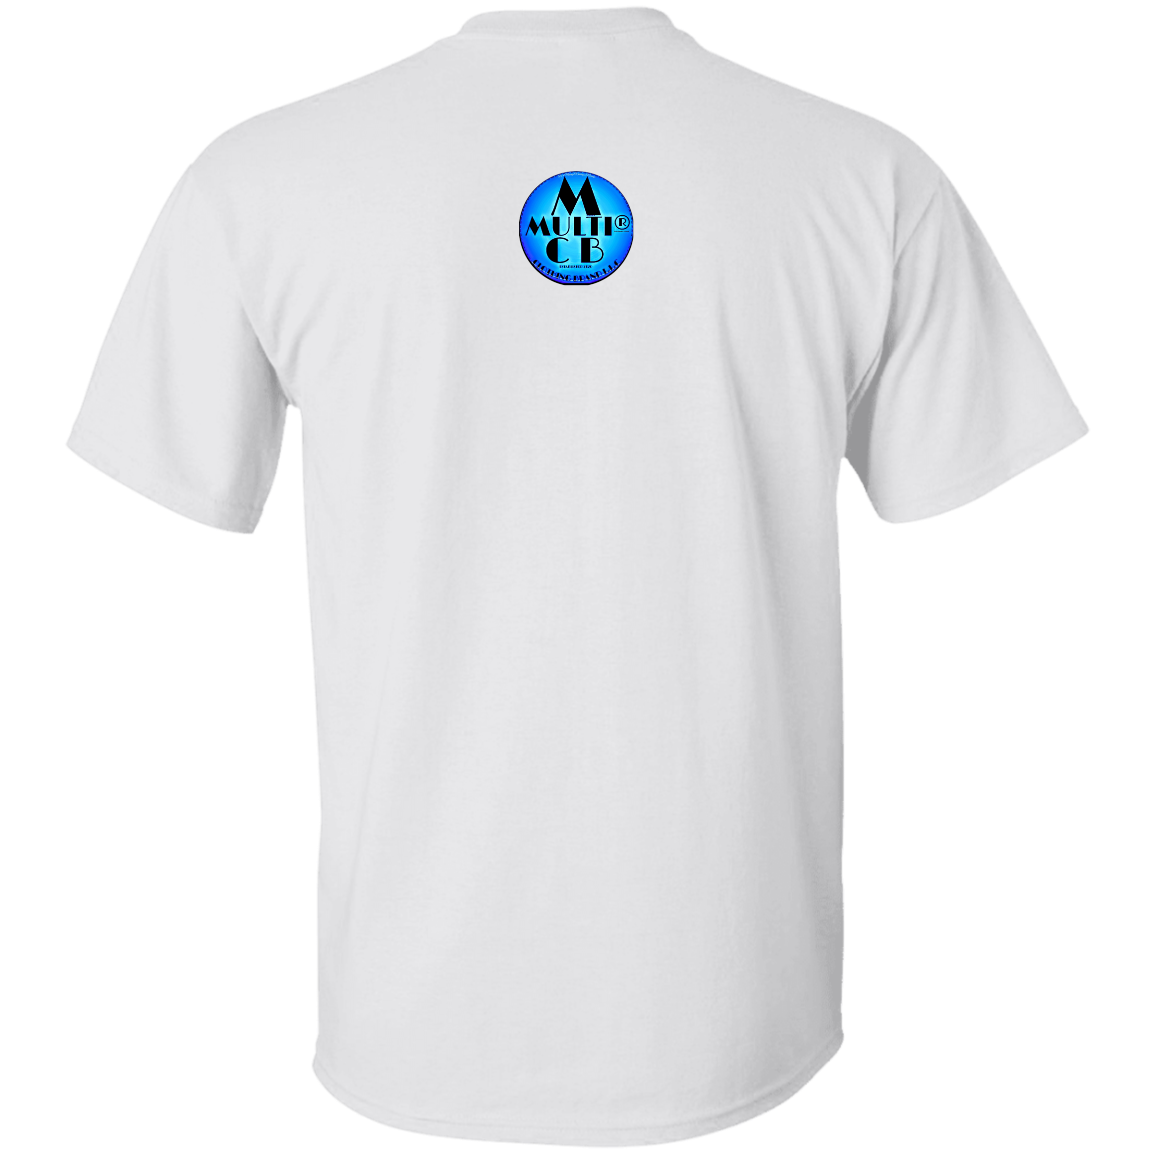 The Flower Of Life - Men T-Shirt - G500 5.3 oz. T-Shirt CustomCat